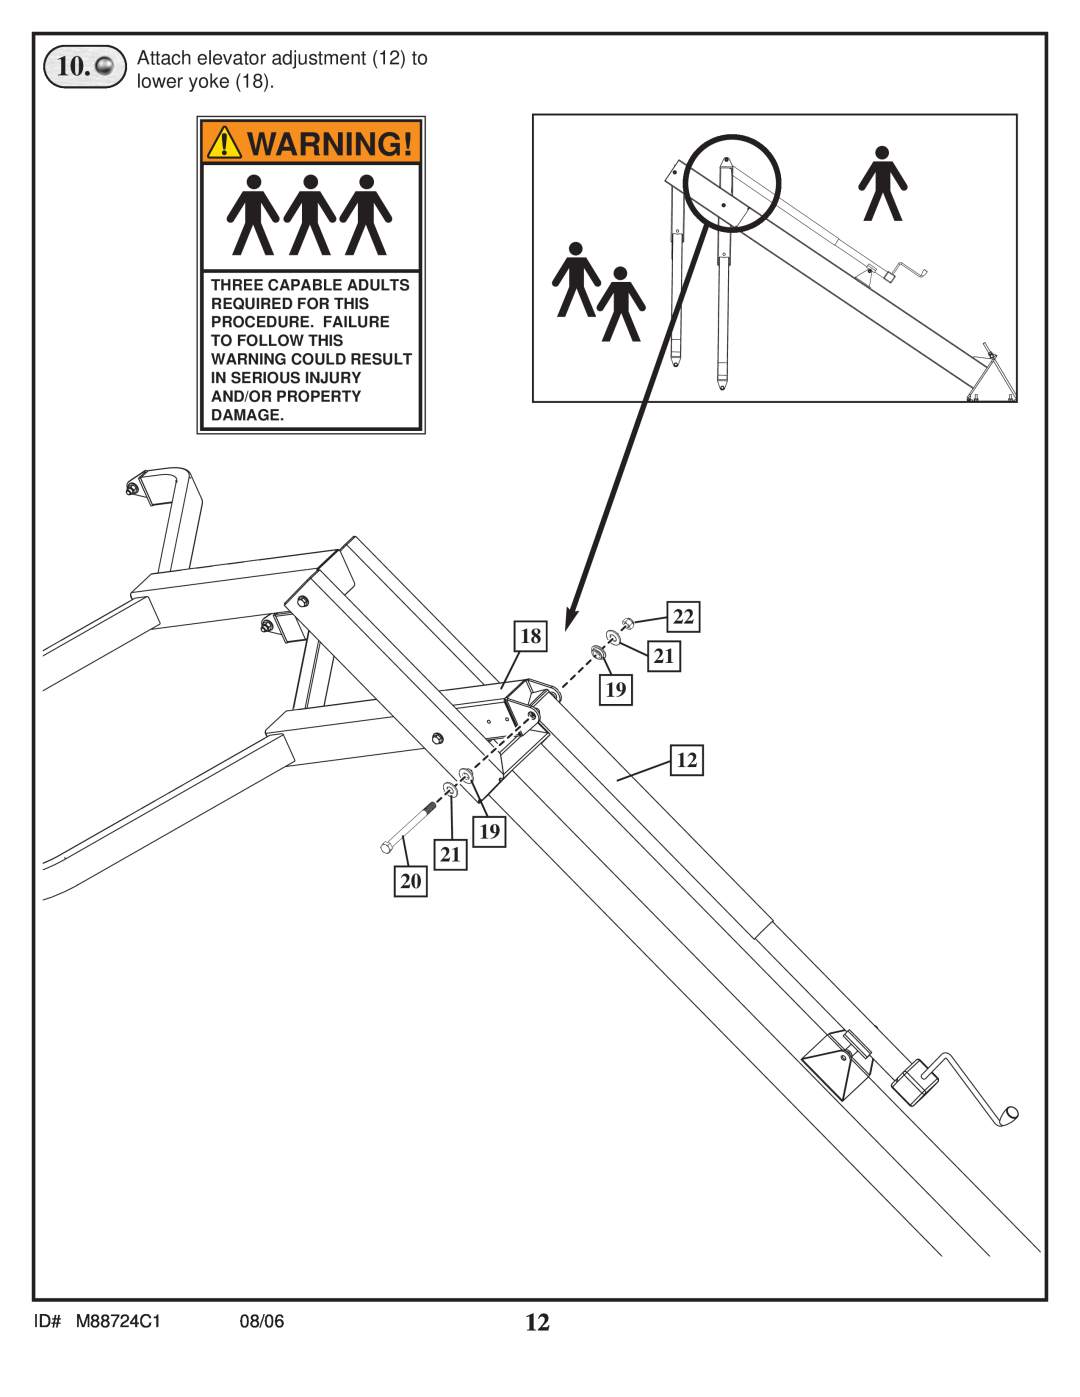 Spalding manual Attach elevator adjustment 12 to, lower yoke, ID# M88724C1, 08/06, Damage 